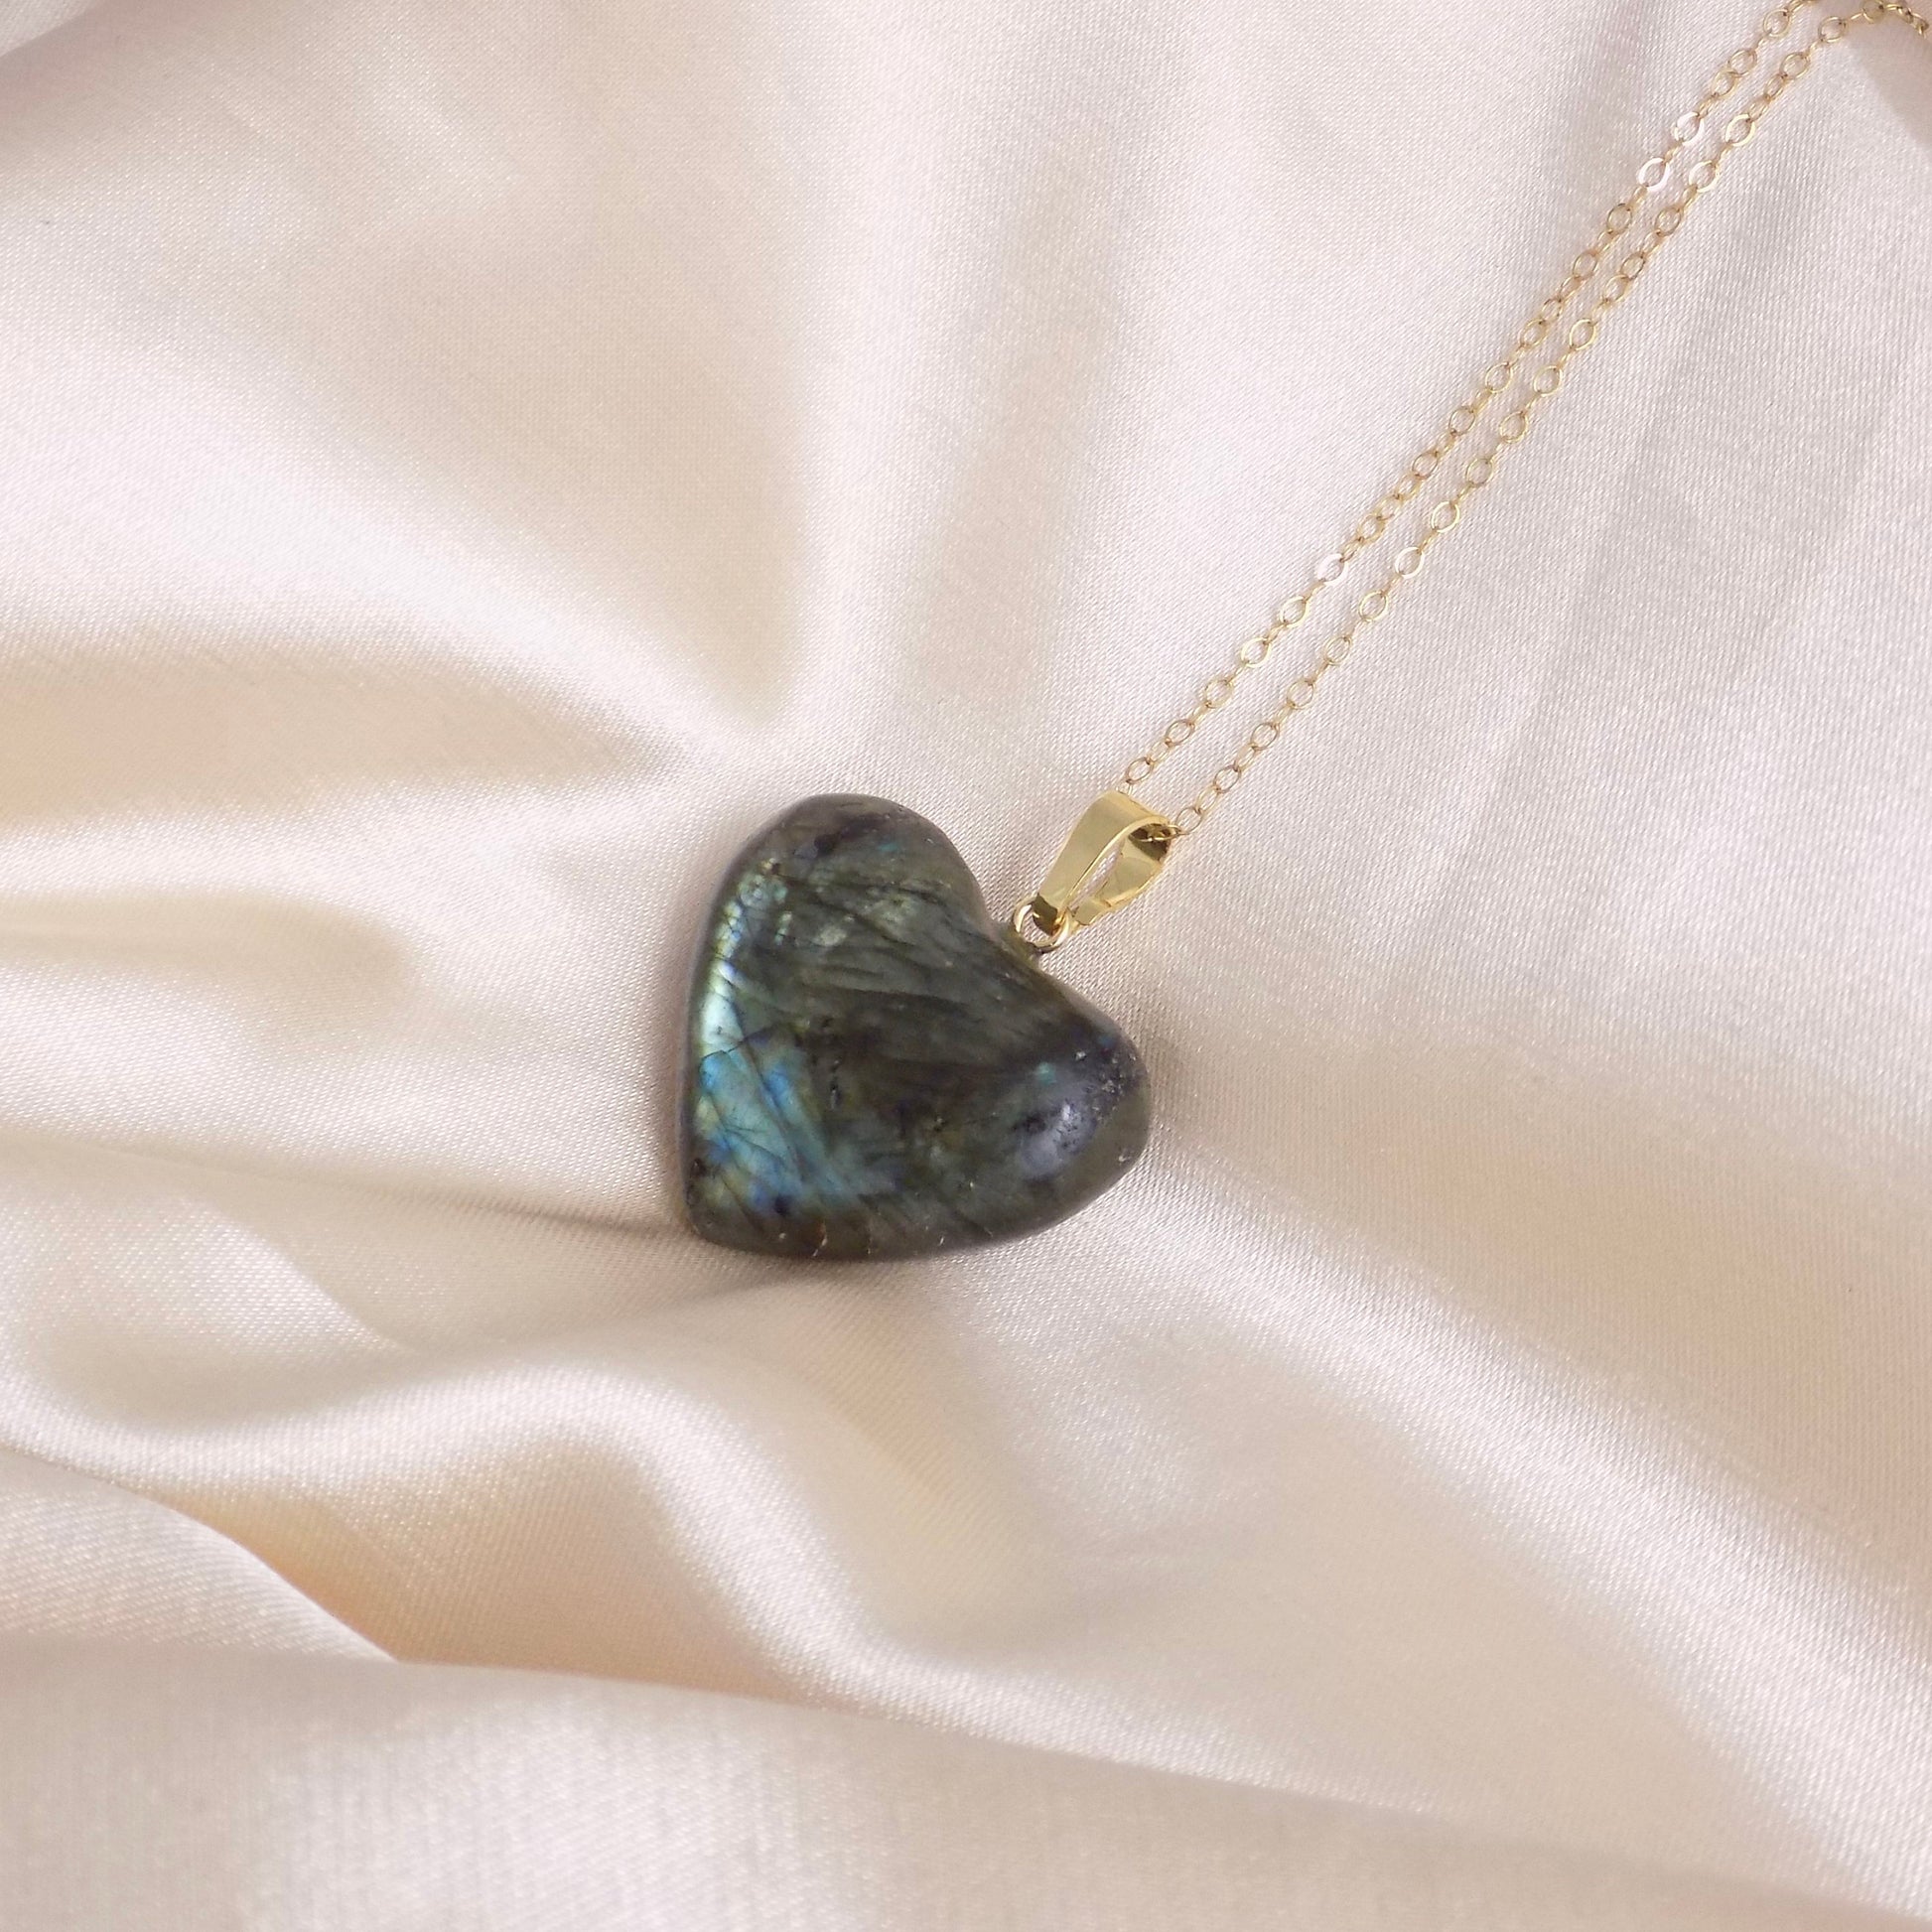 Labradorite Heart Pendant, Blue Flash Gray Crystal Pendant, Gift Women, M7-23